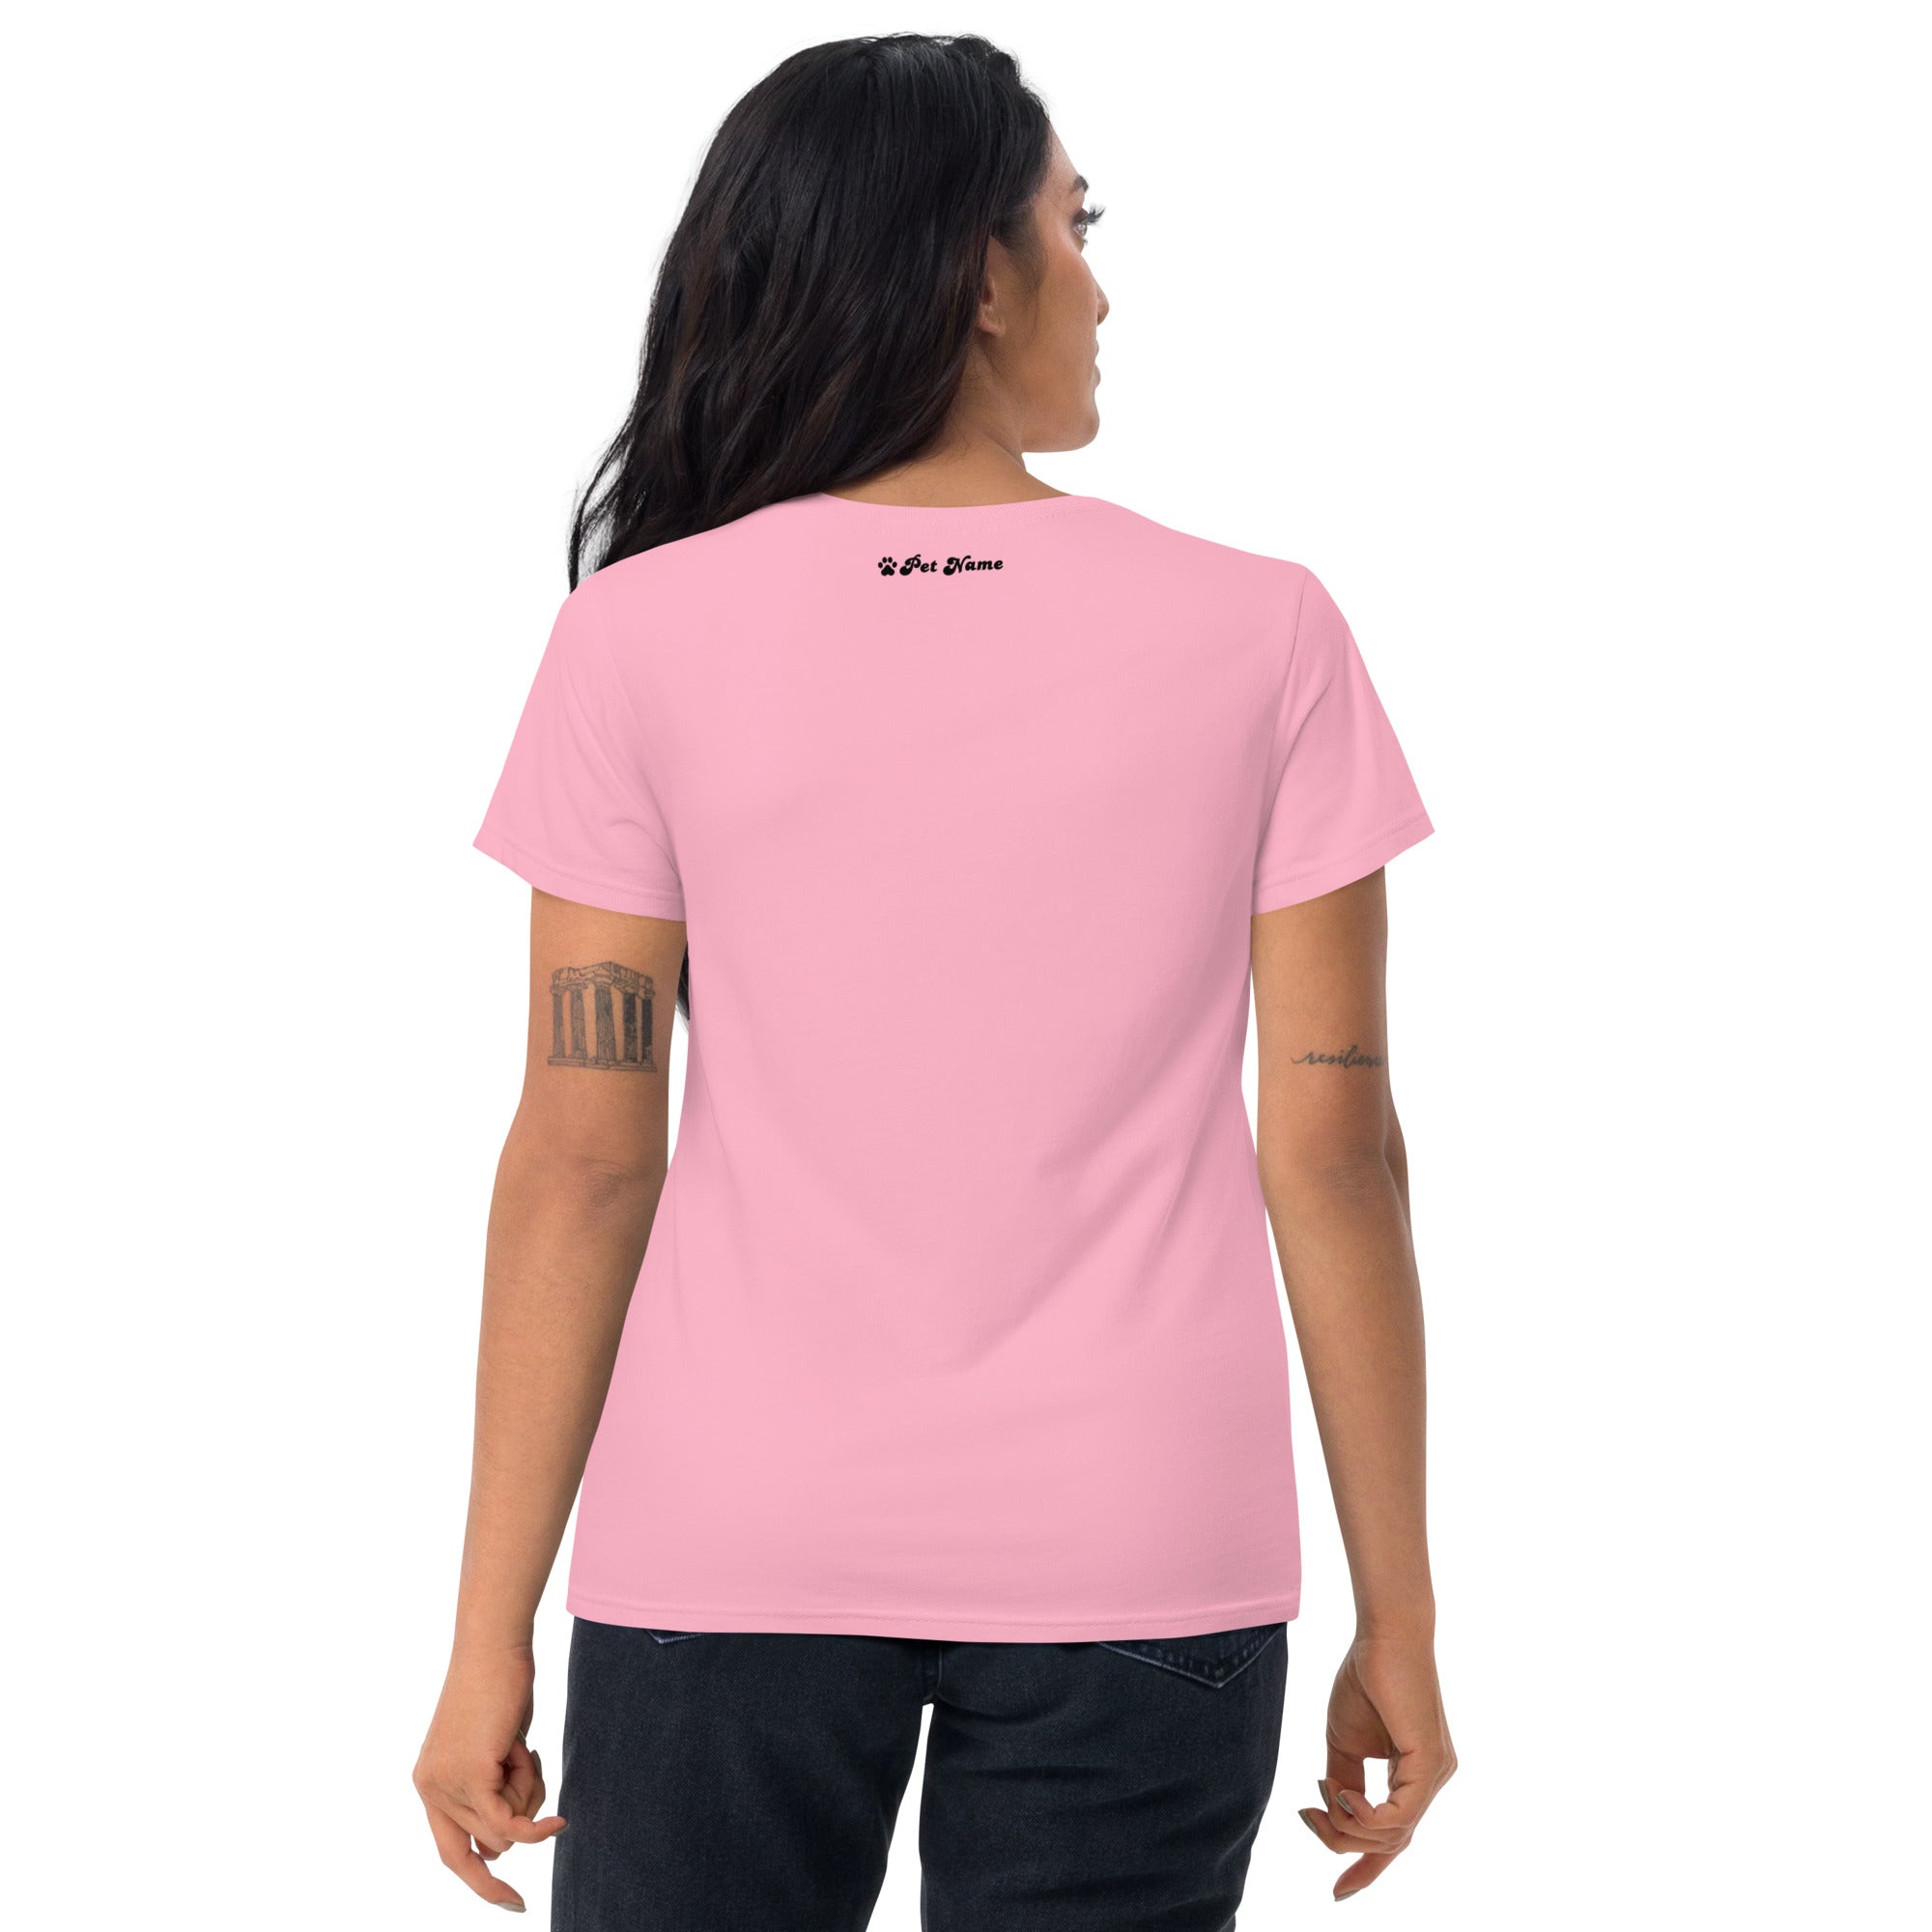 Lhasa Apso Women's short sleeve t-shirt